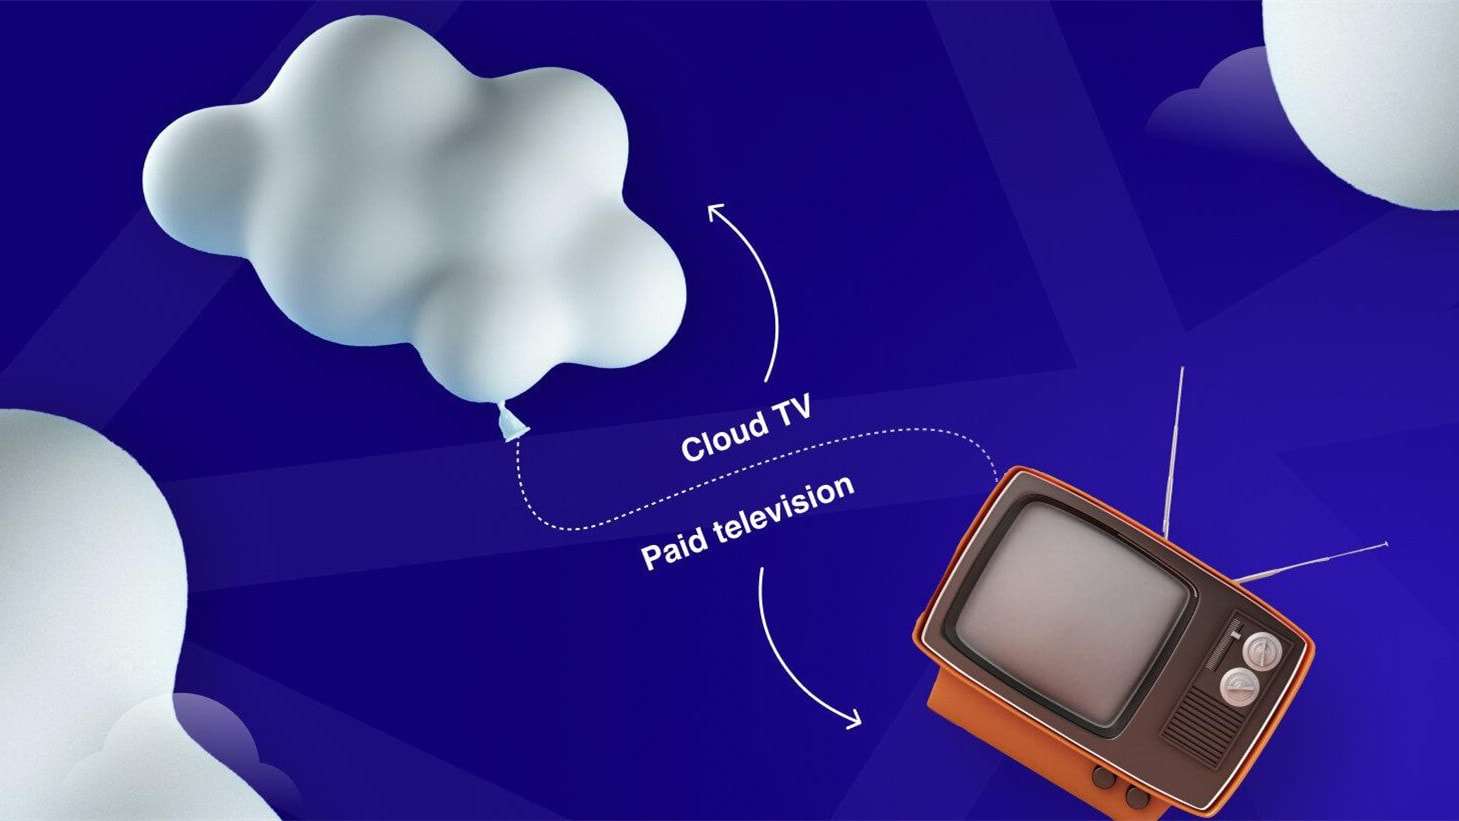 Cloud TV 云电视